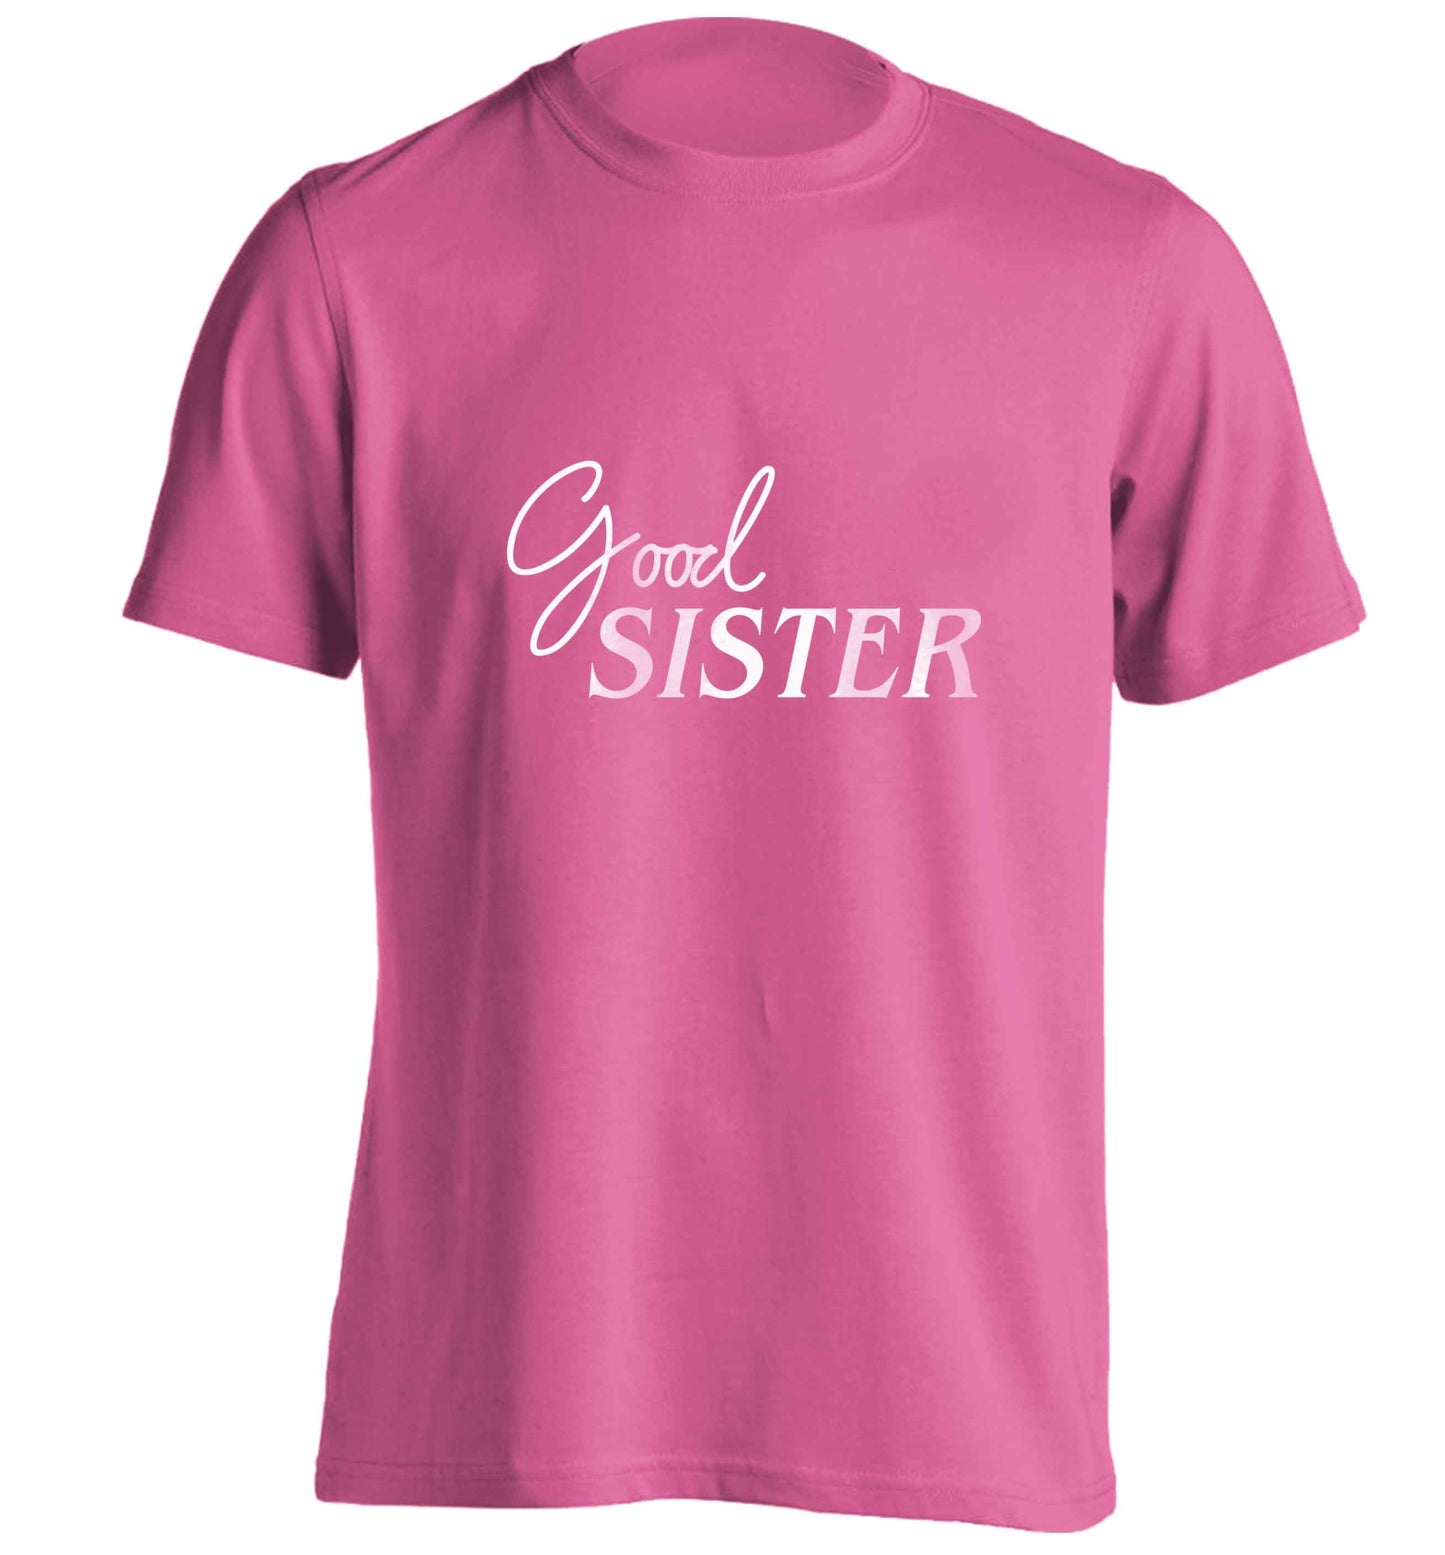 Good sister adults unisex pink Tshirt 2XL